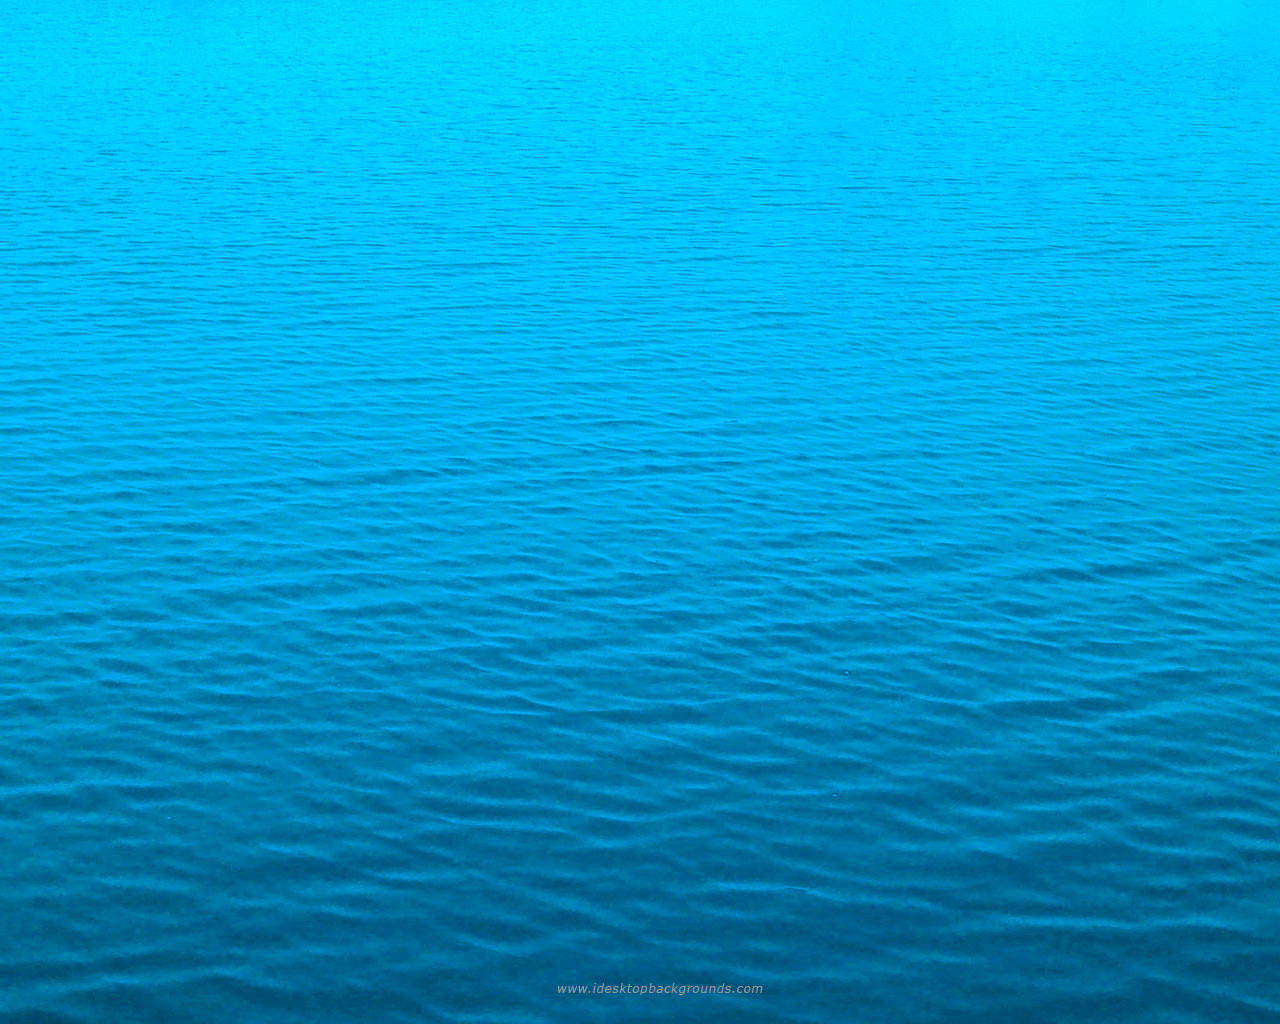  66 Blue Water Background on WallpaperSafari